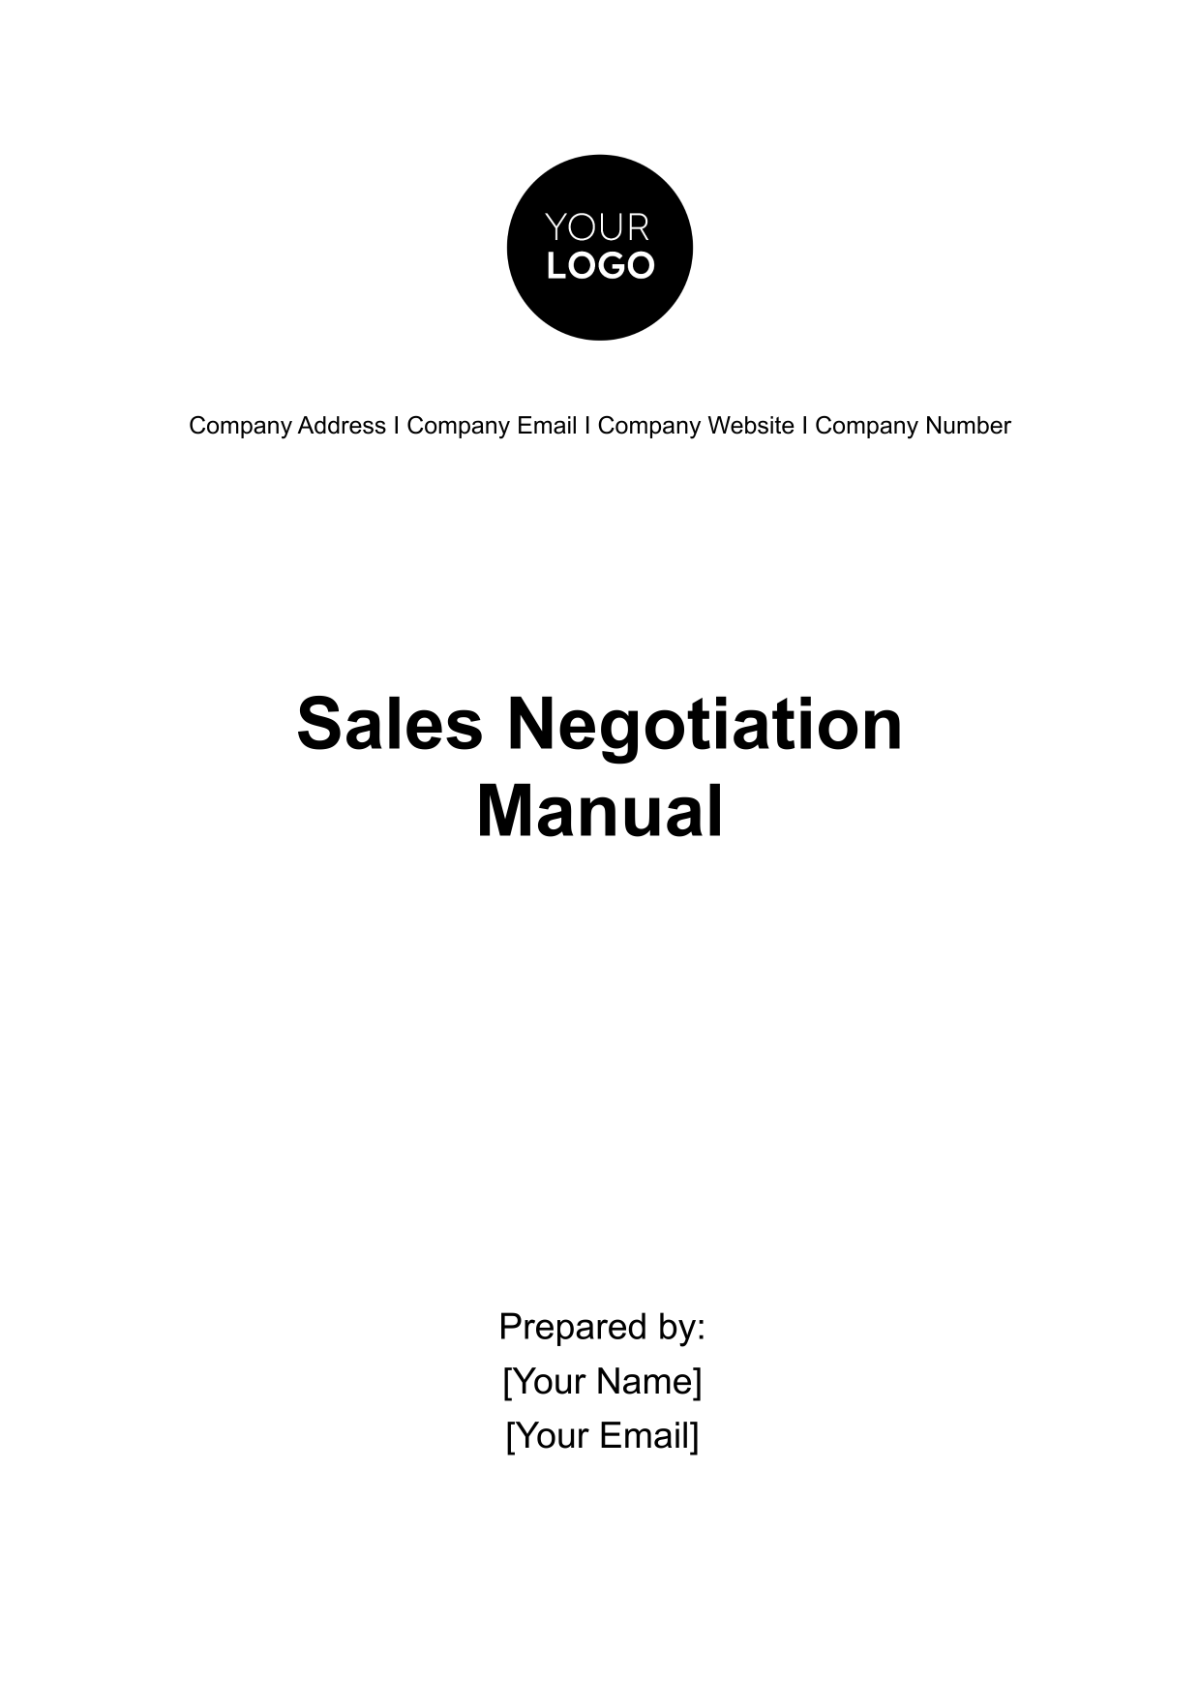 Sales Negotiation Manual Template